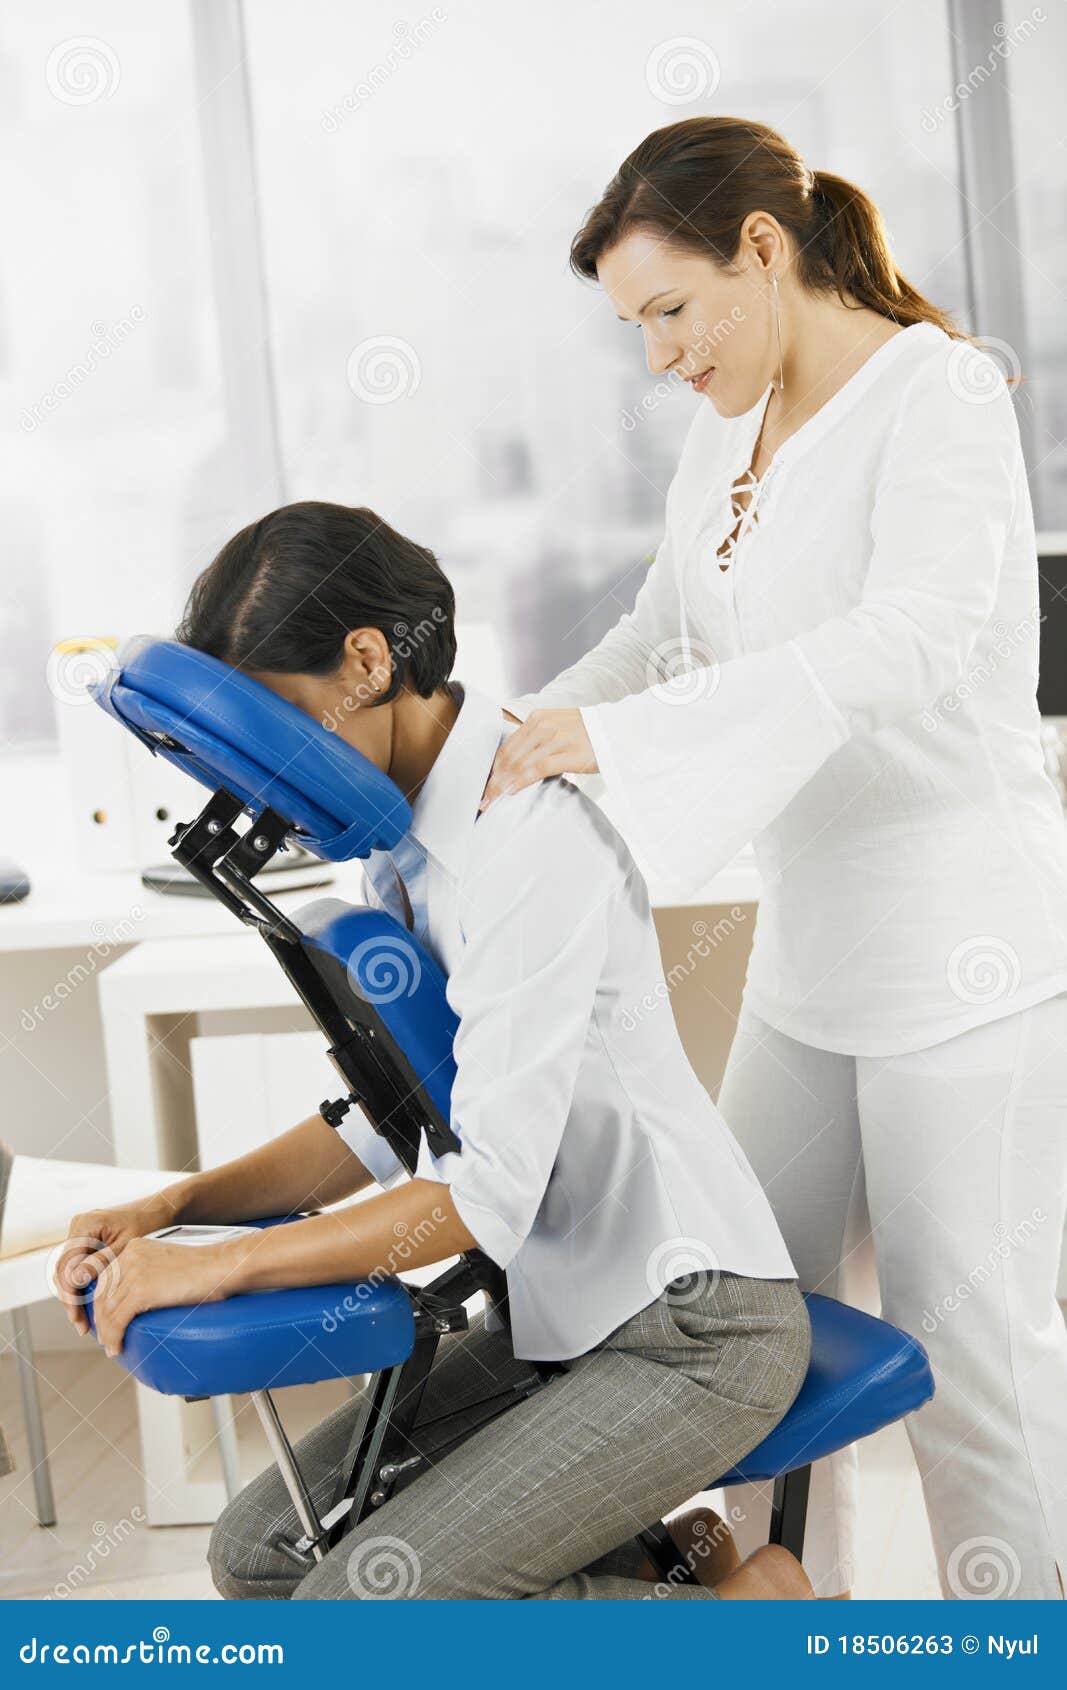 Businesswoman Getting Neck Massage Stock Image Image Of Leisure